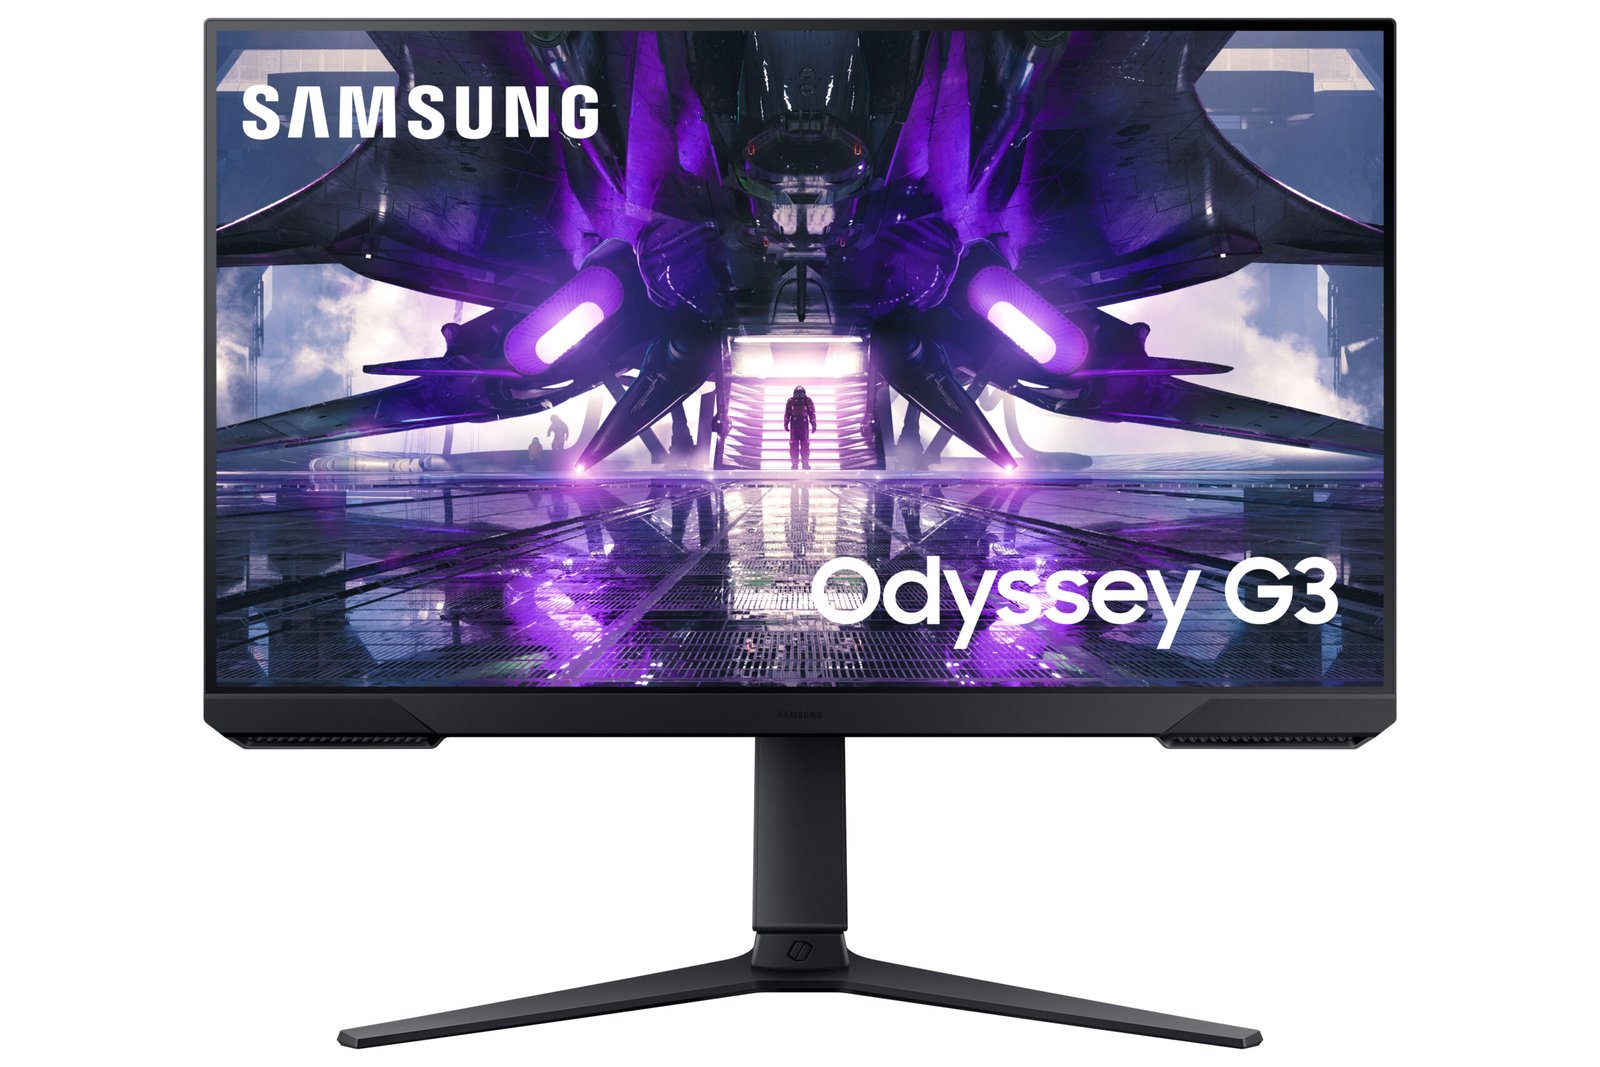 Samsung Odyssey G3 Announcement